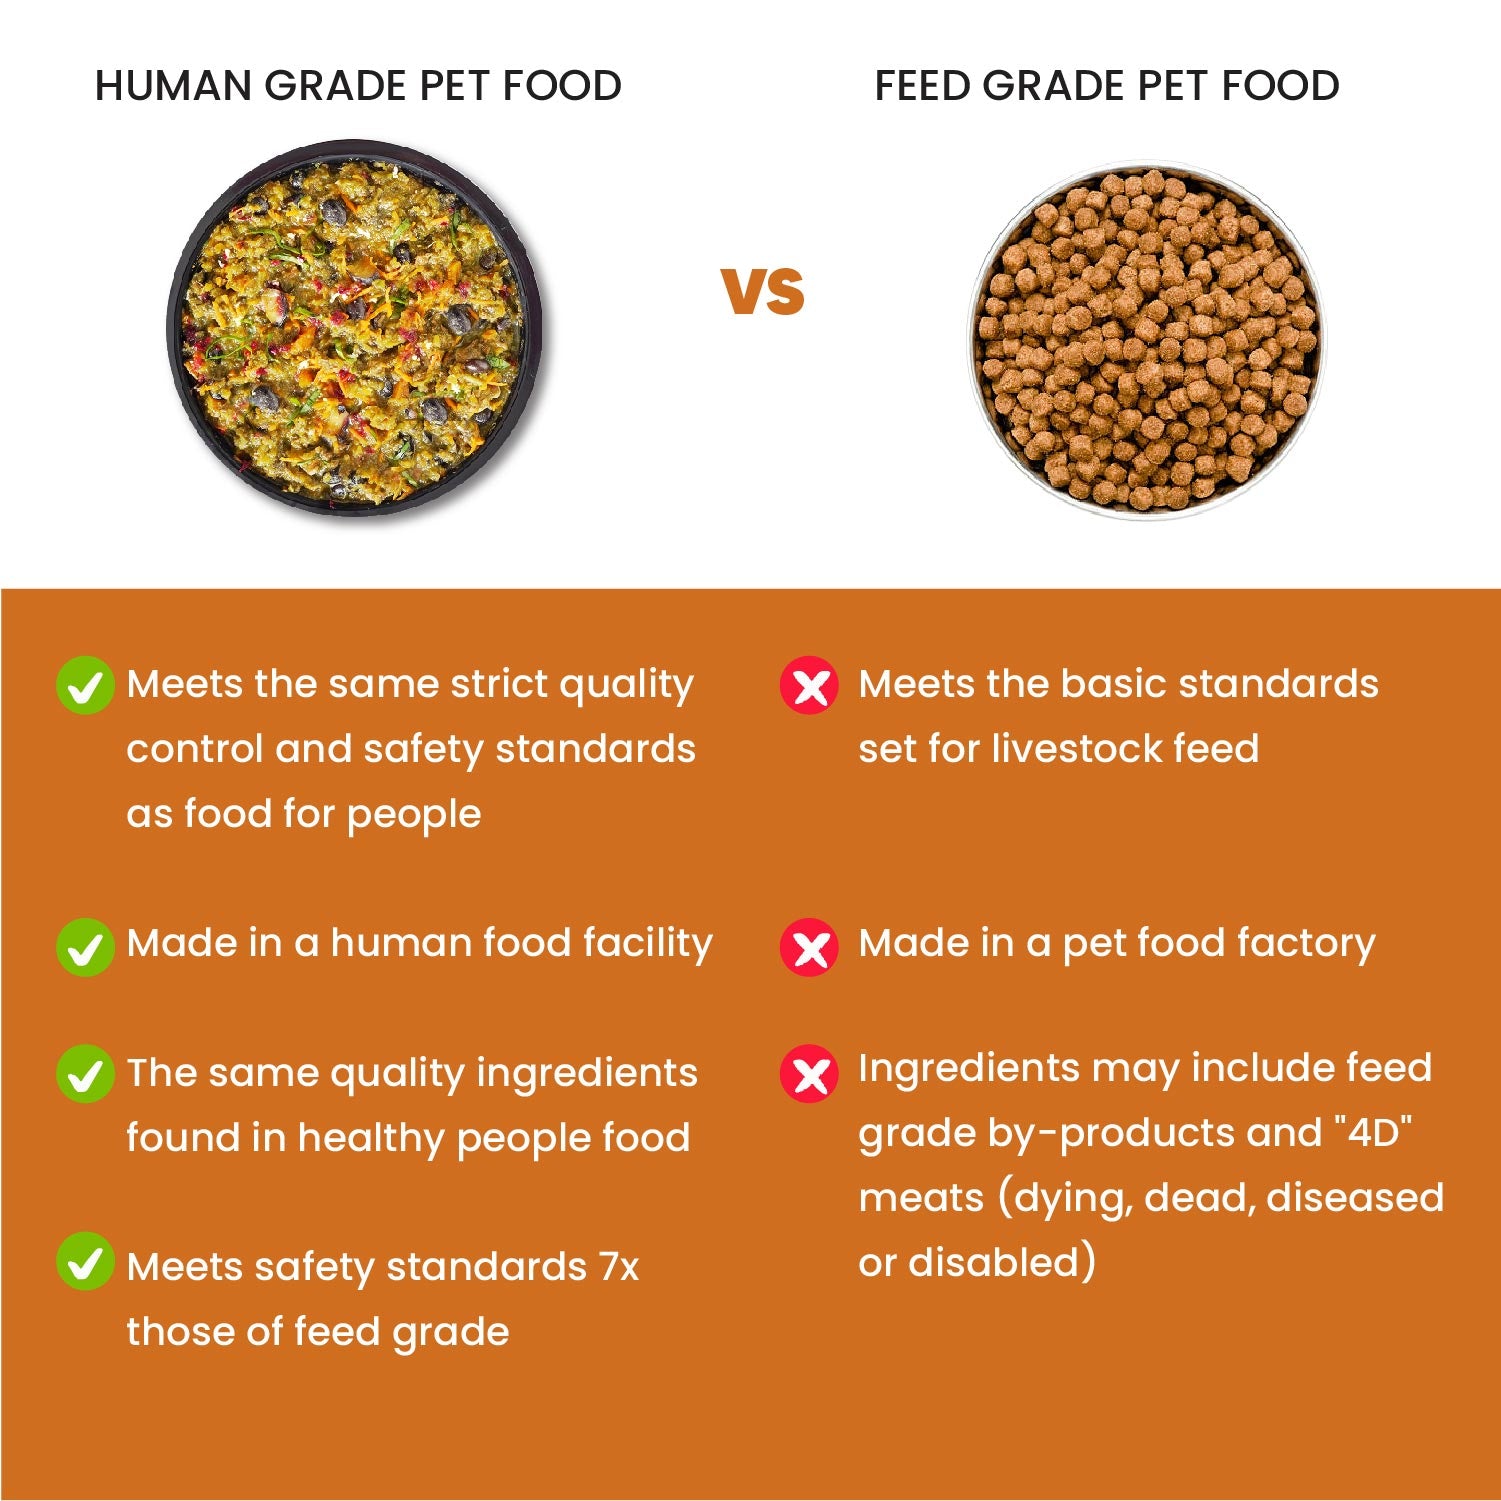 Human Grade pet food VS feed grade pet food